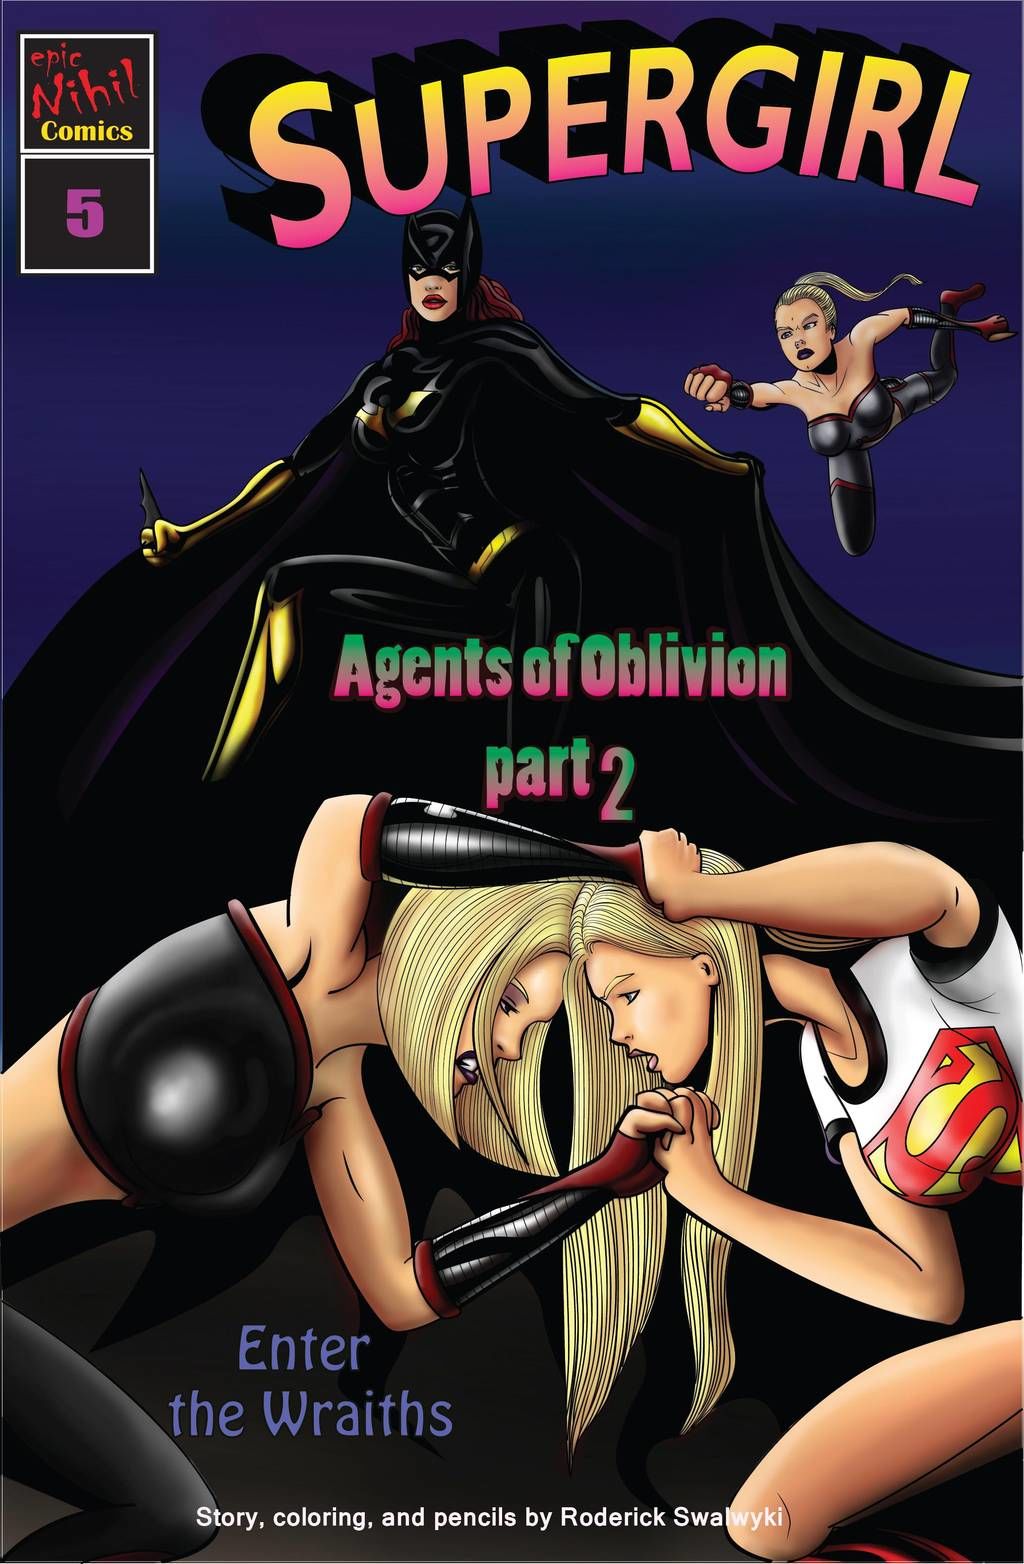 Agents of Oblivion Part 2 - Supergirl page 1